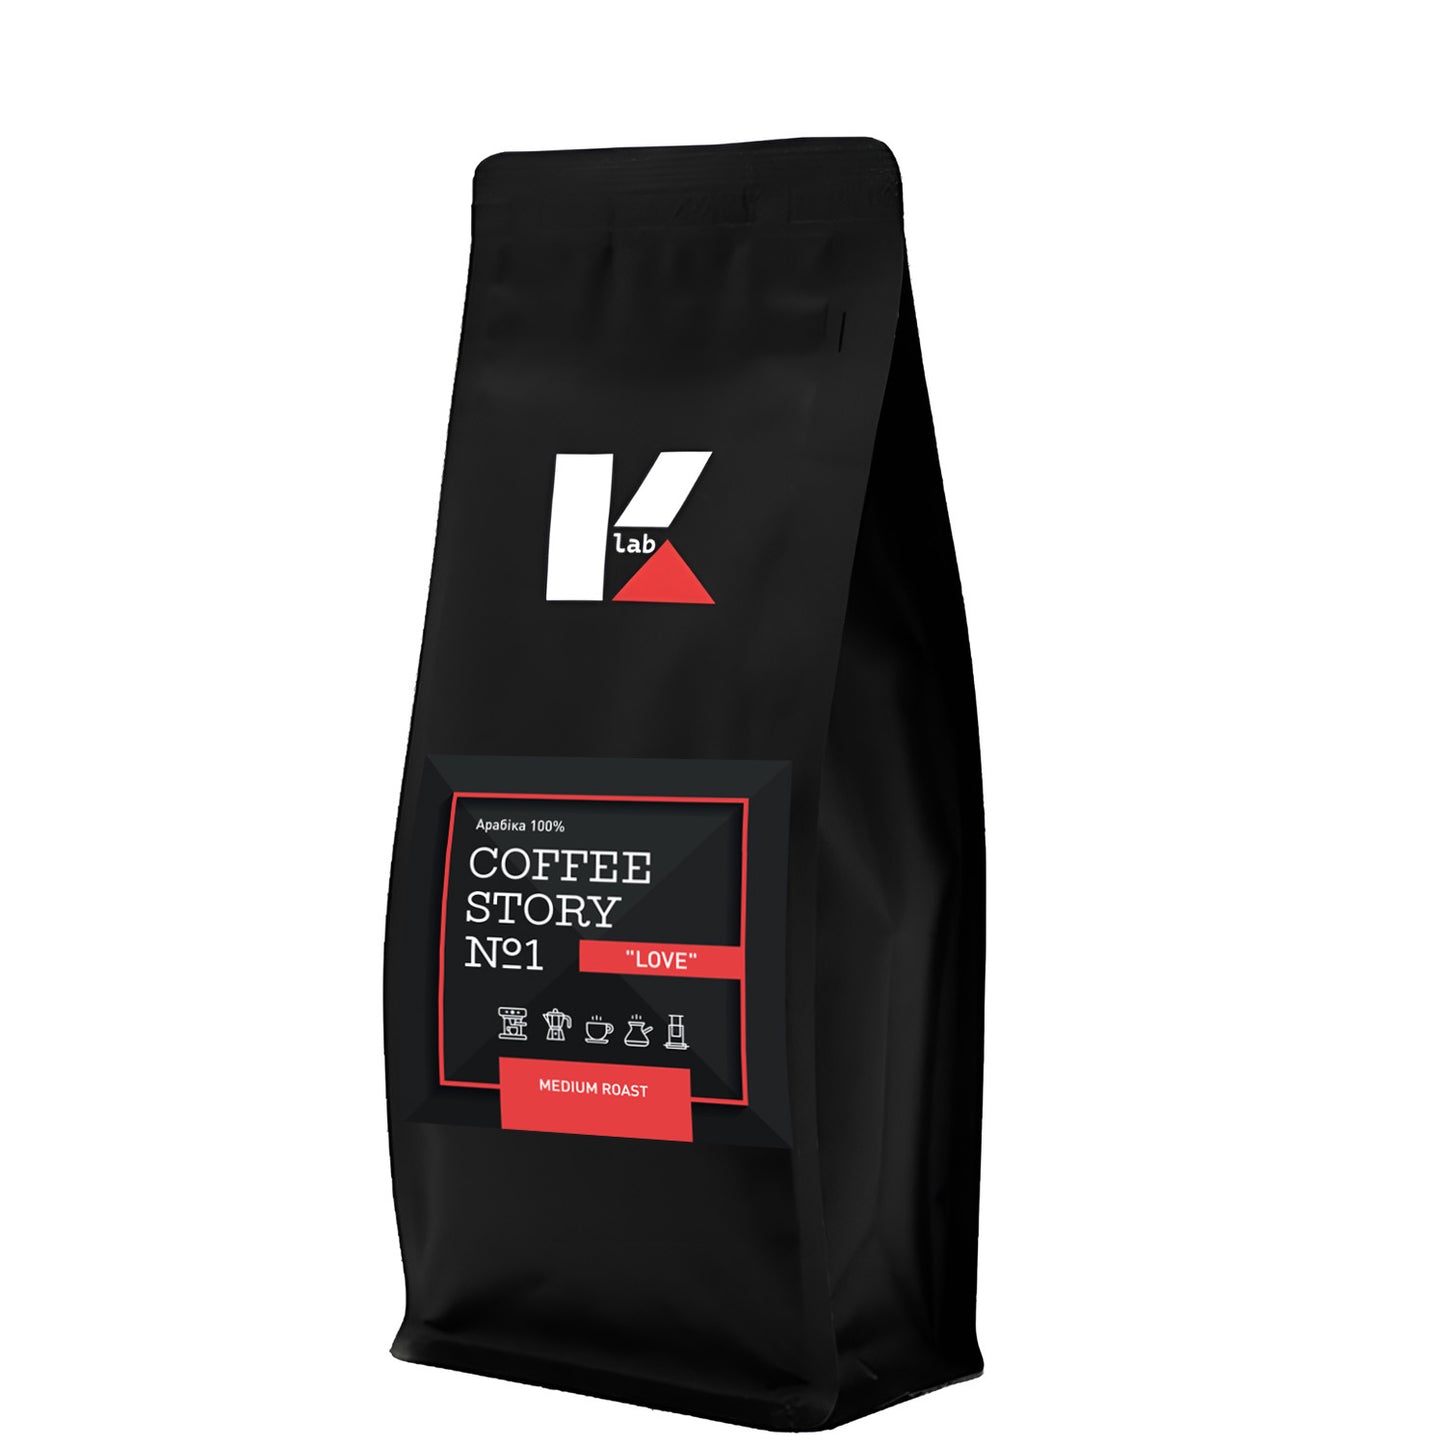 COFFEE STORY №1 - Klab (1kg front)